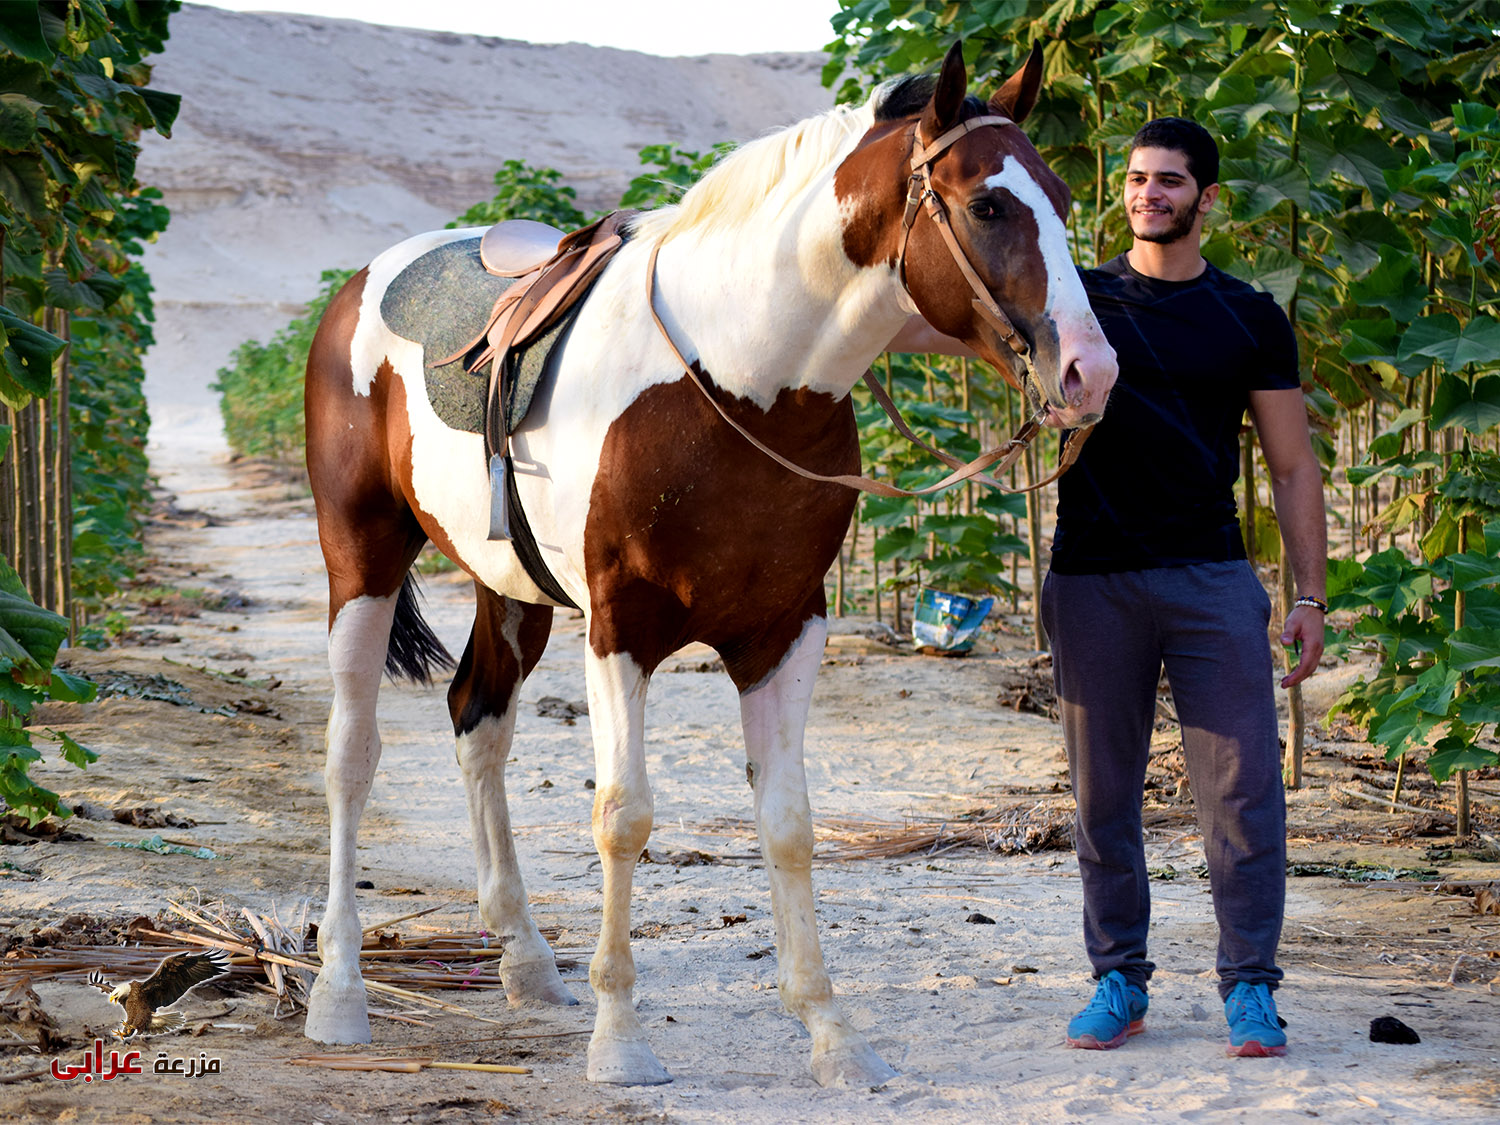 elbasha - خيول للبيع في مصر - مزرعة عرابي للخيول المميزة و الخيول الامريكية الملونه - oraby farm